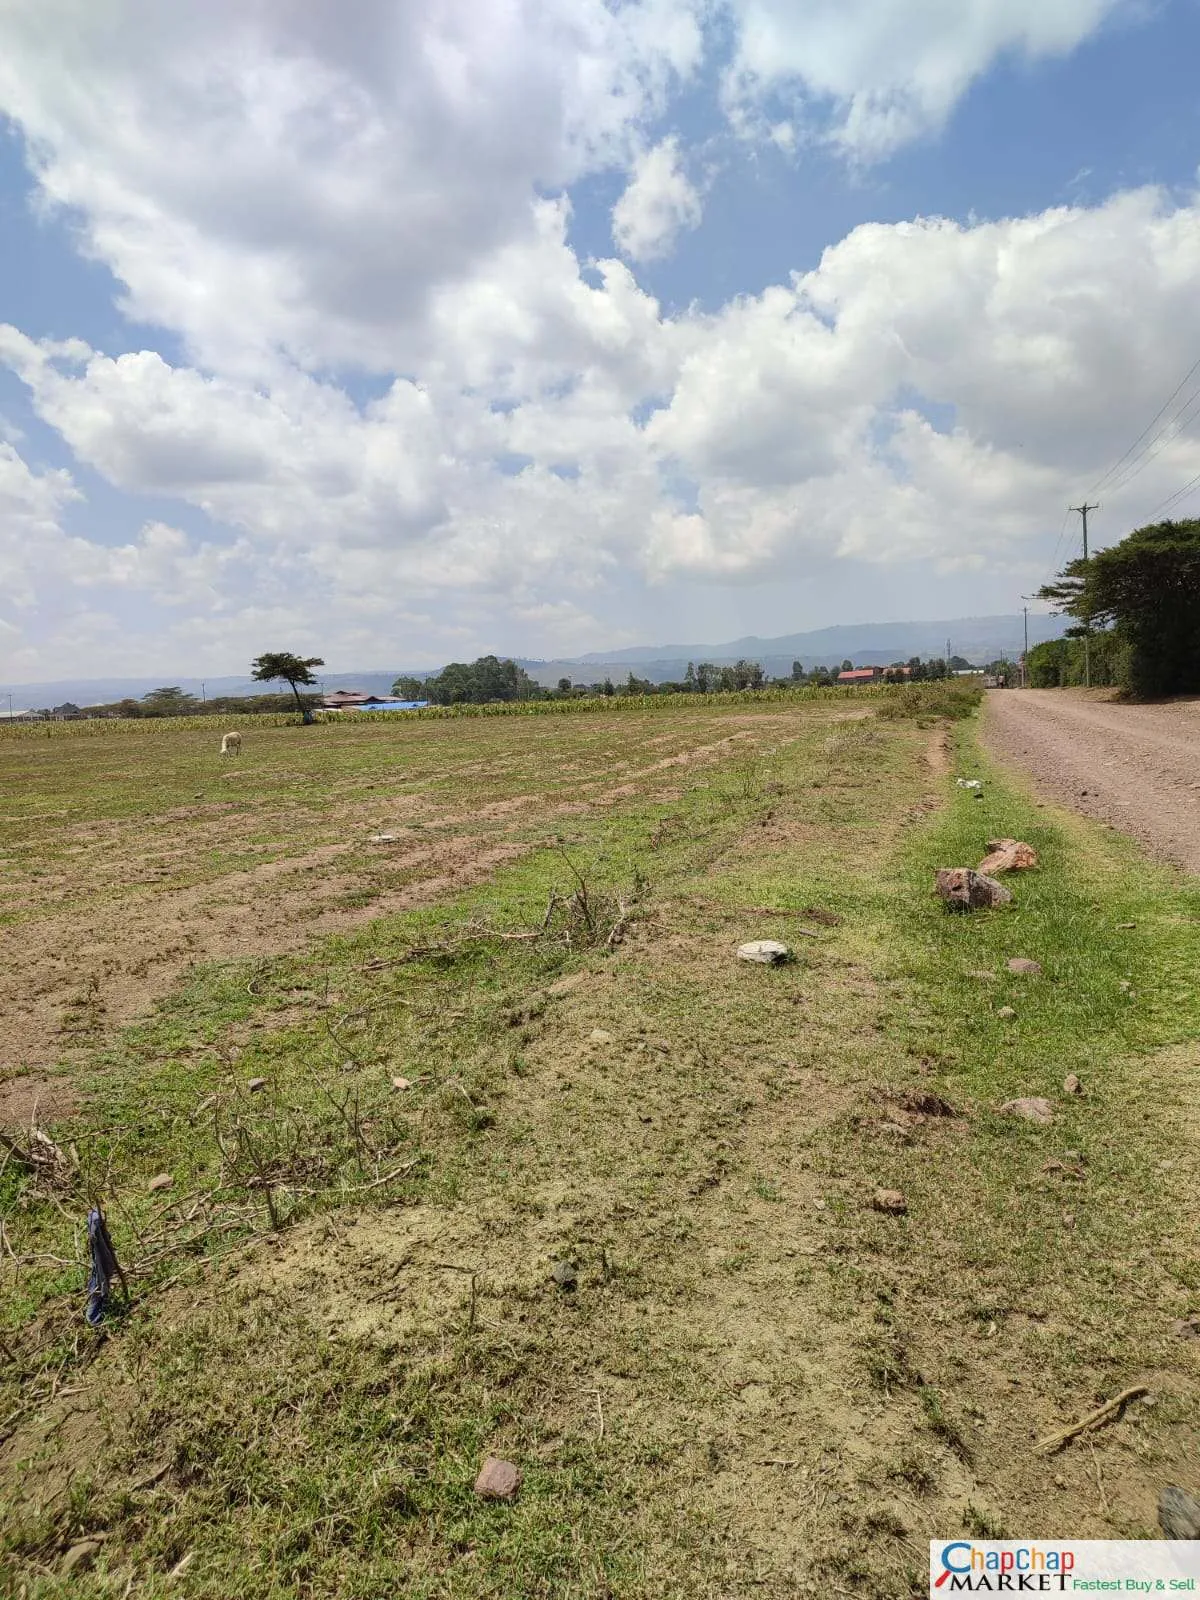 Land for Sale in Nakuru 3 acres for sale Eastgate Nakuru QUICK SALE Clean Title Deed